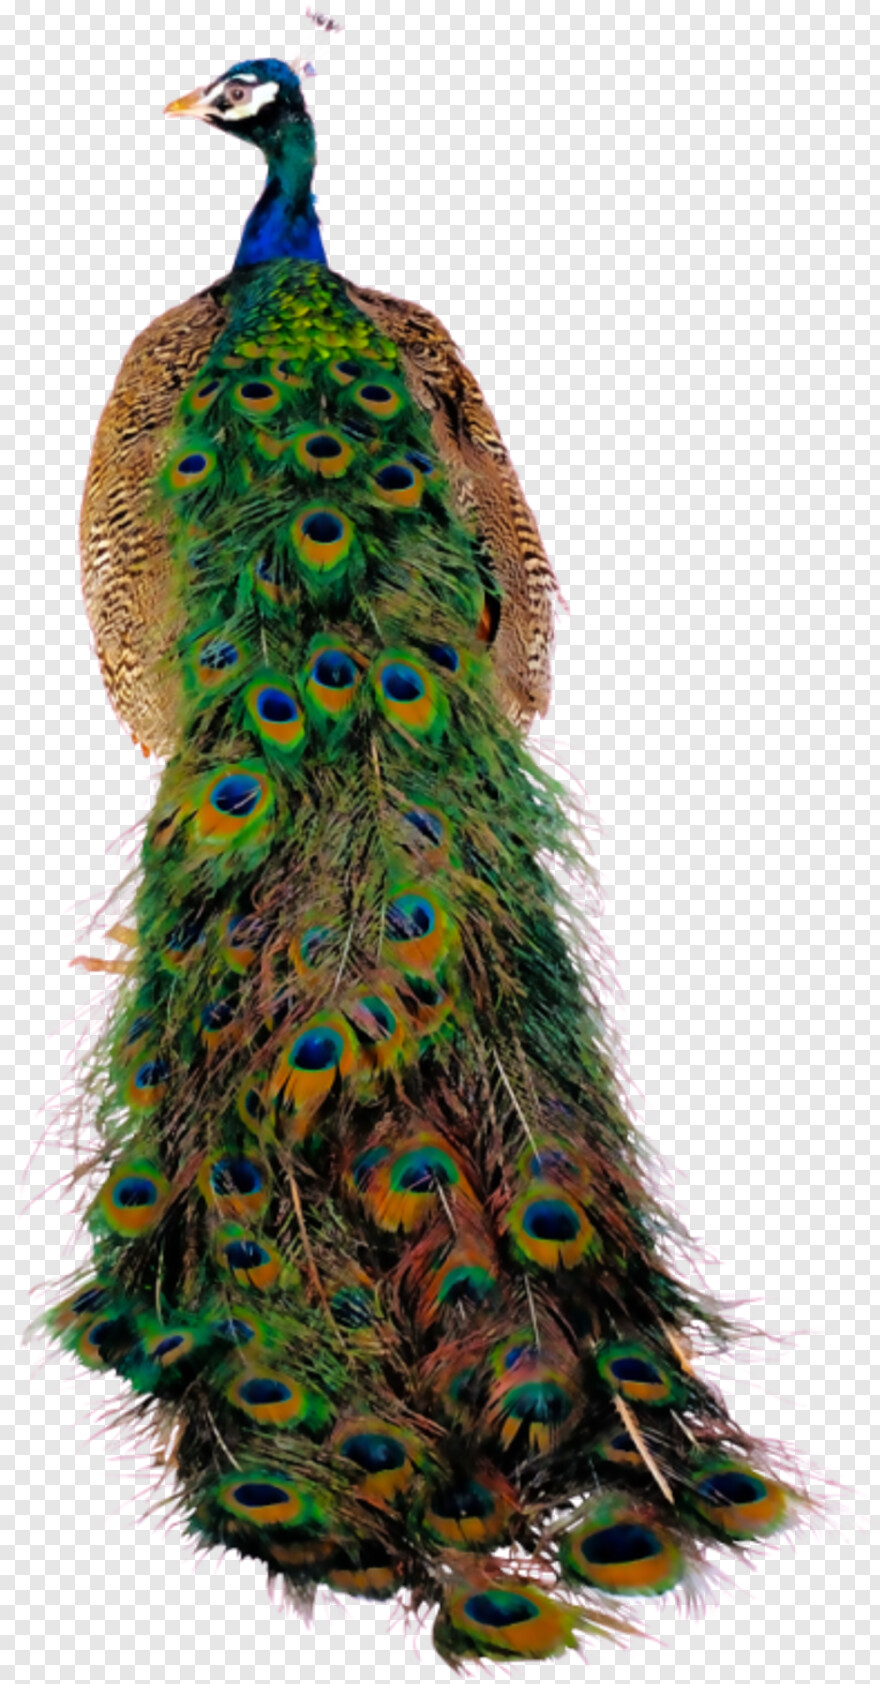 peacock-clipart # 360241